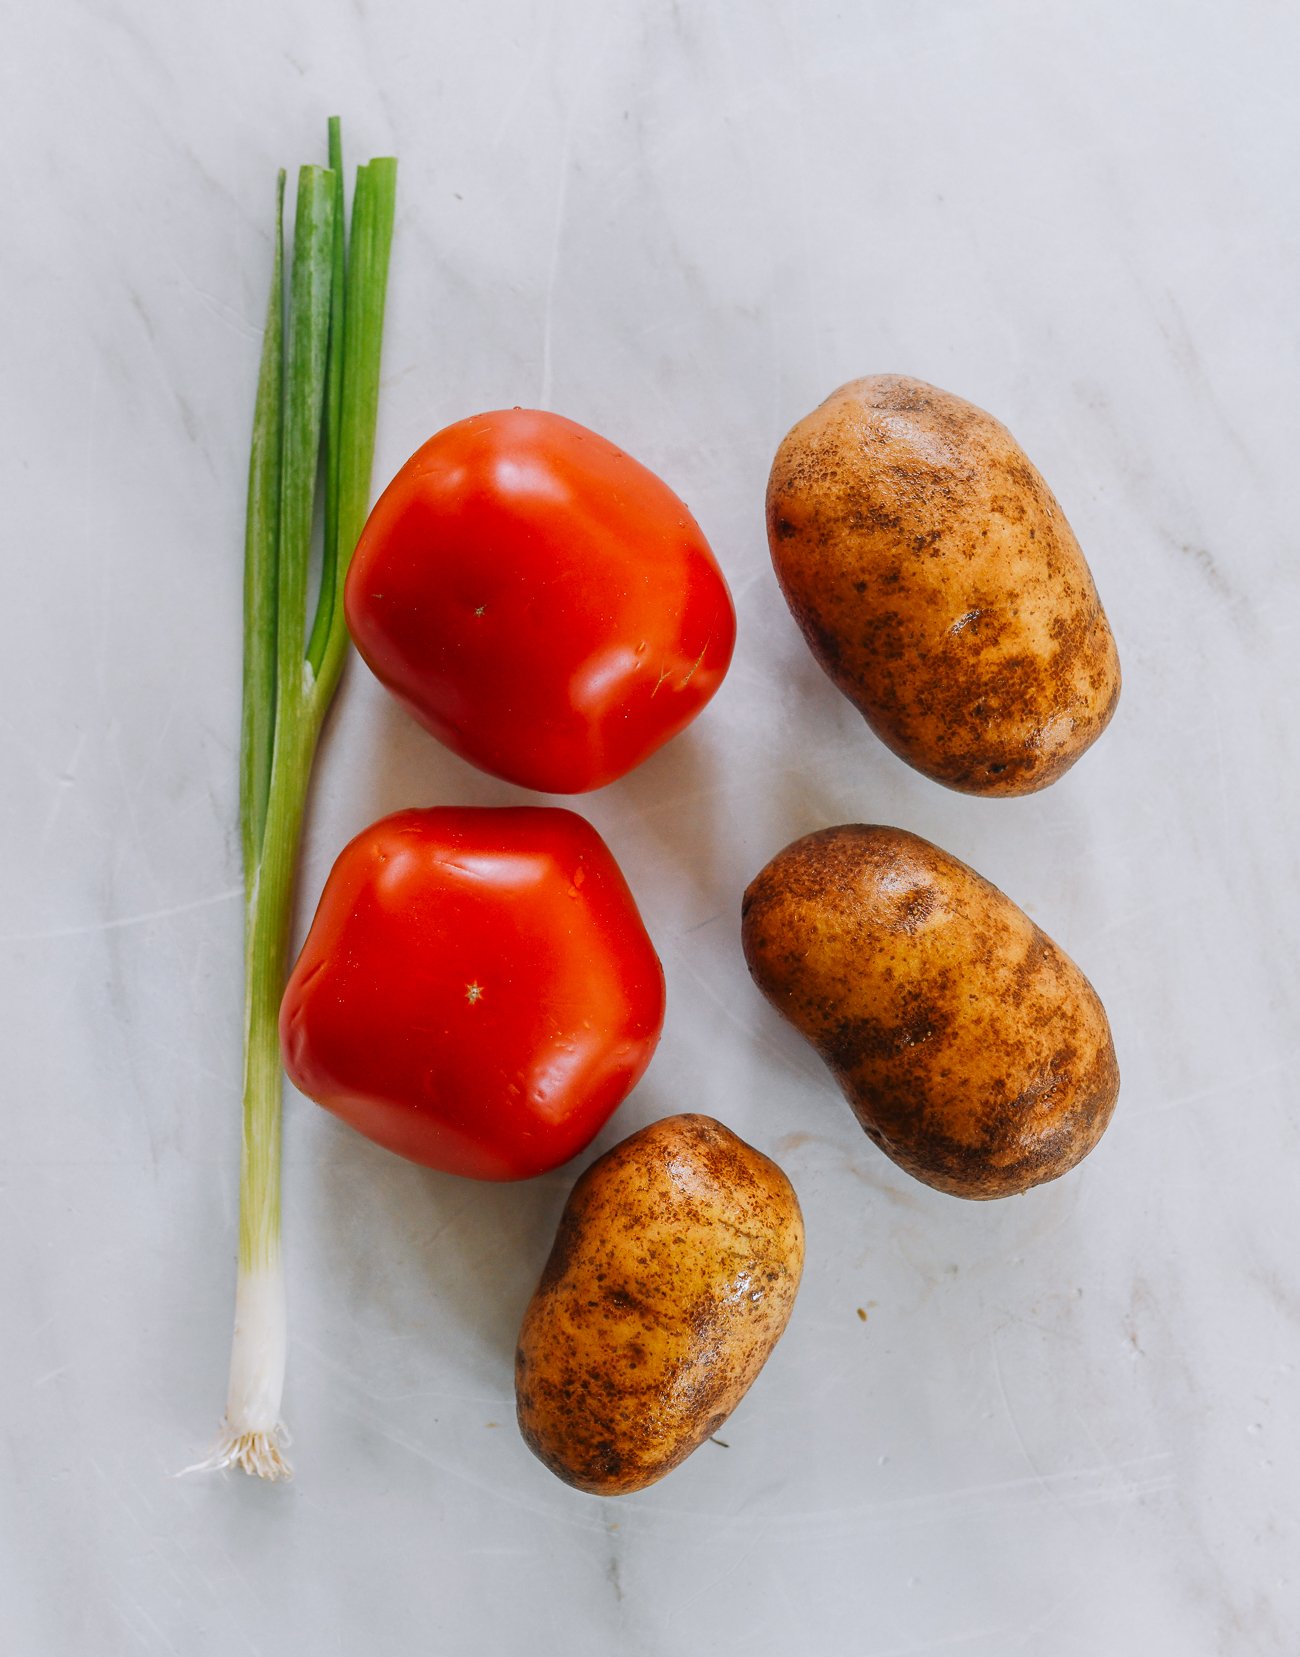 Scallion, Tomatoes, and Potatoes